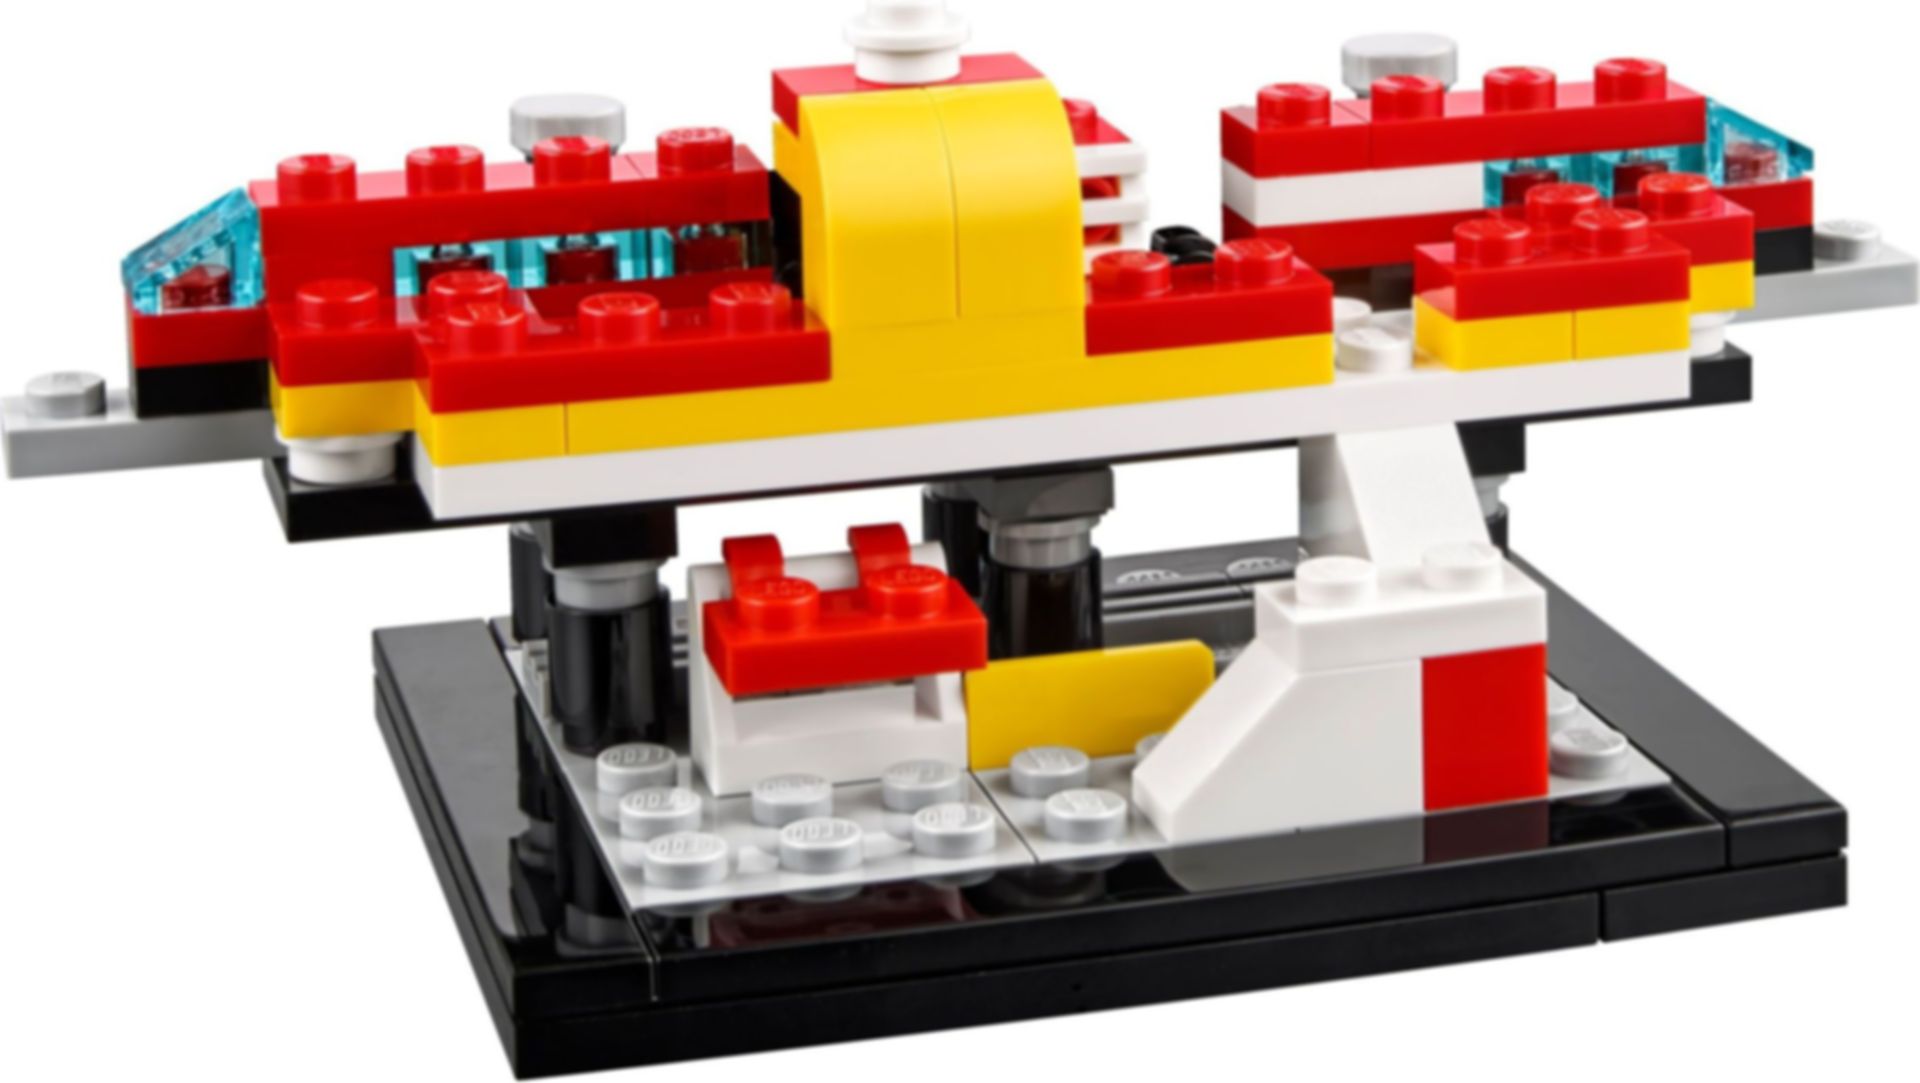 60 Years of the LEGO Brick komponenten